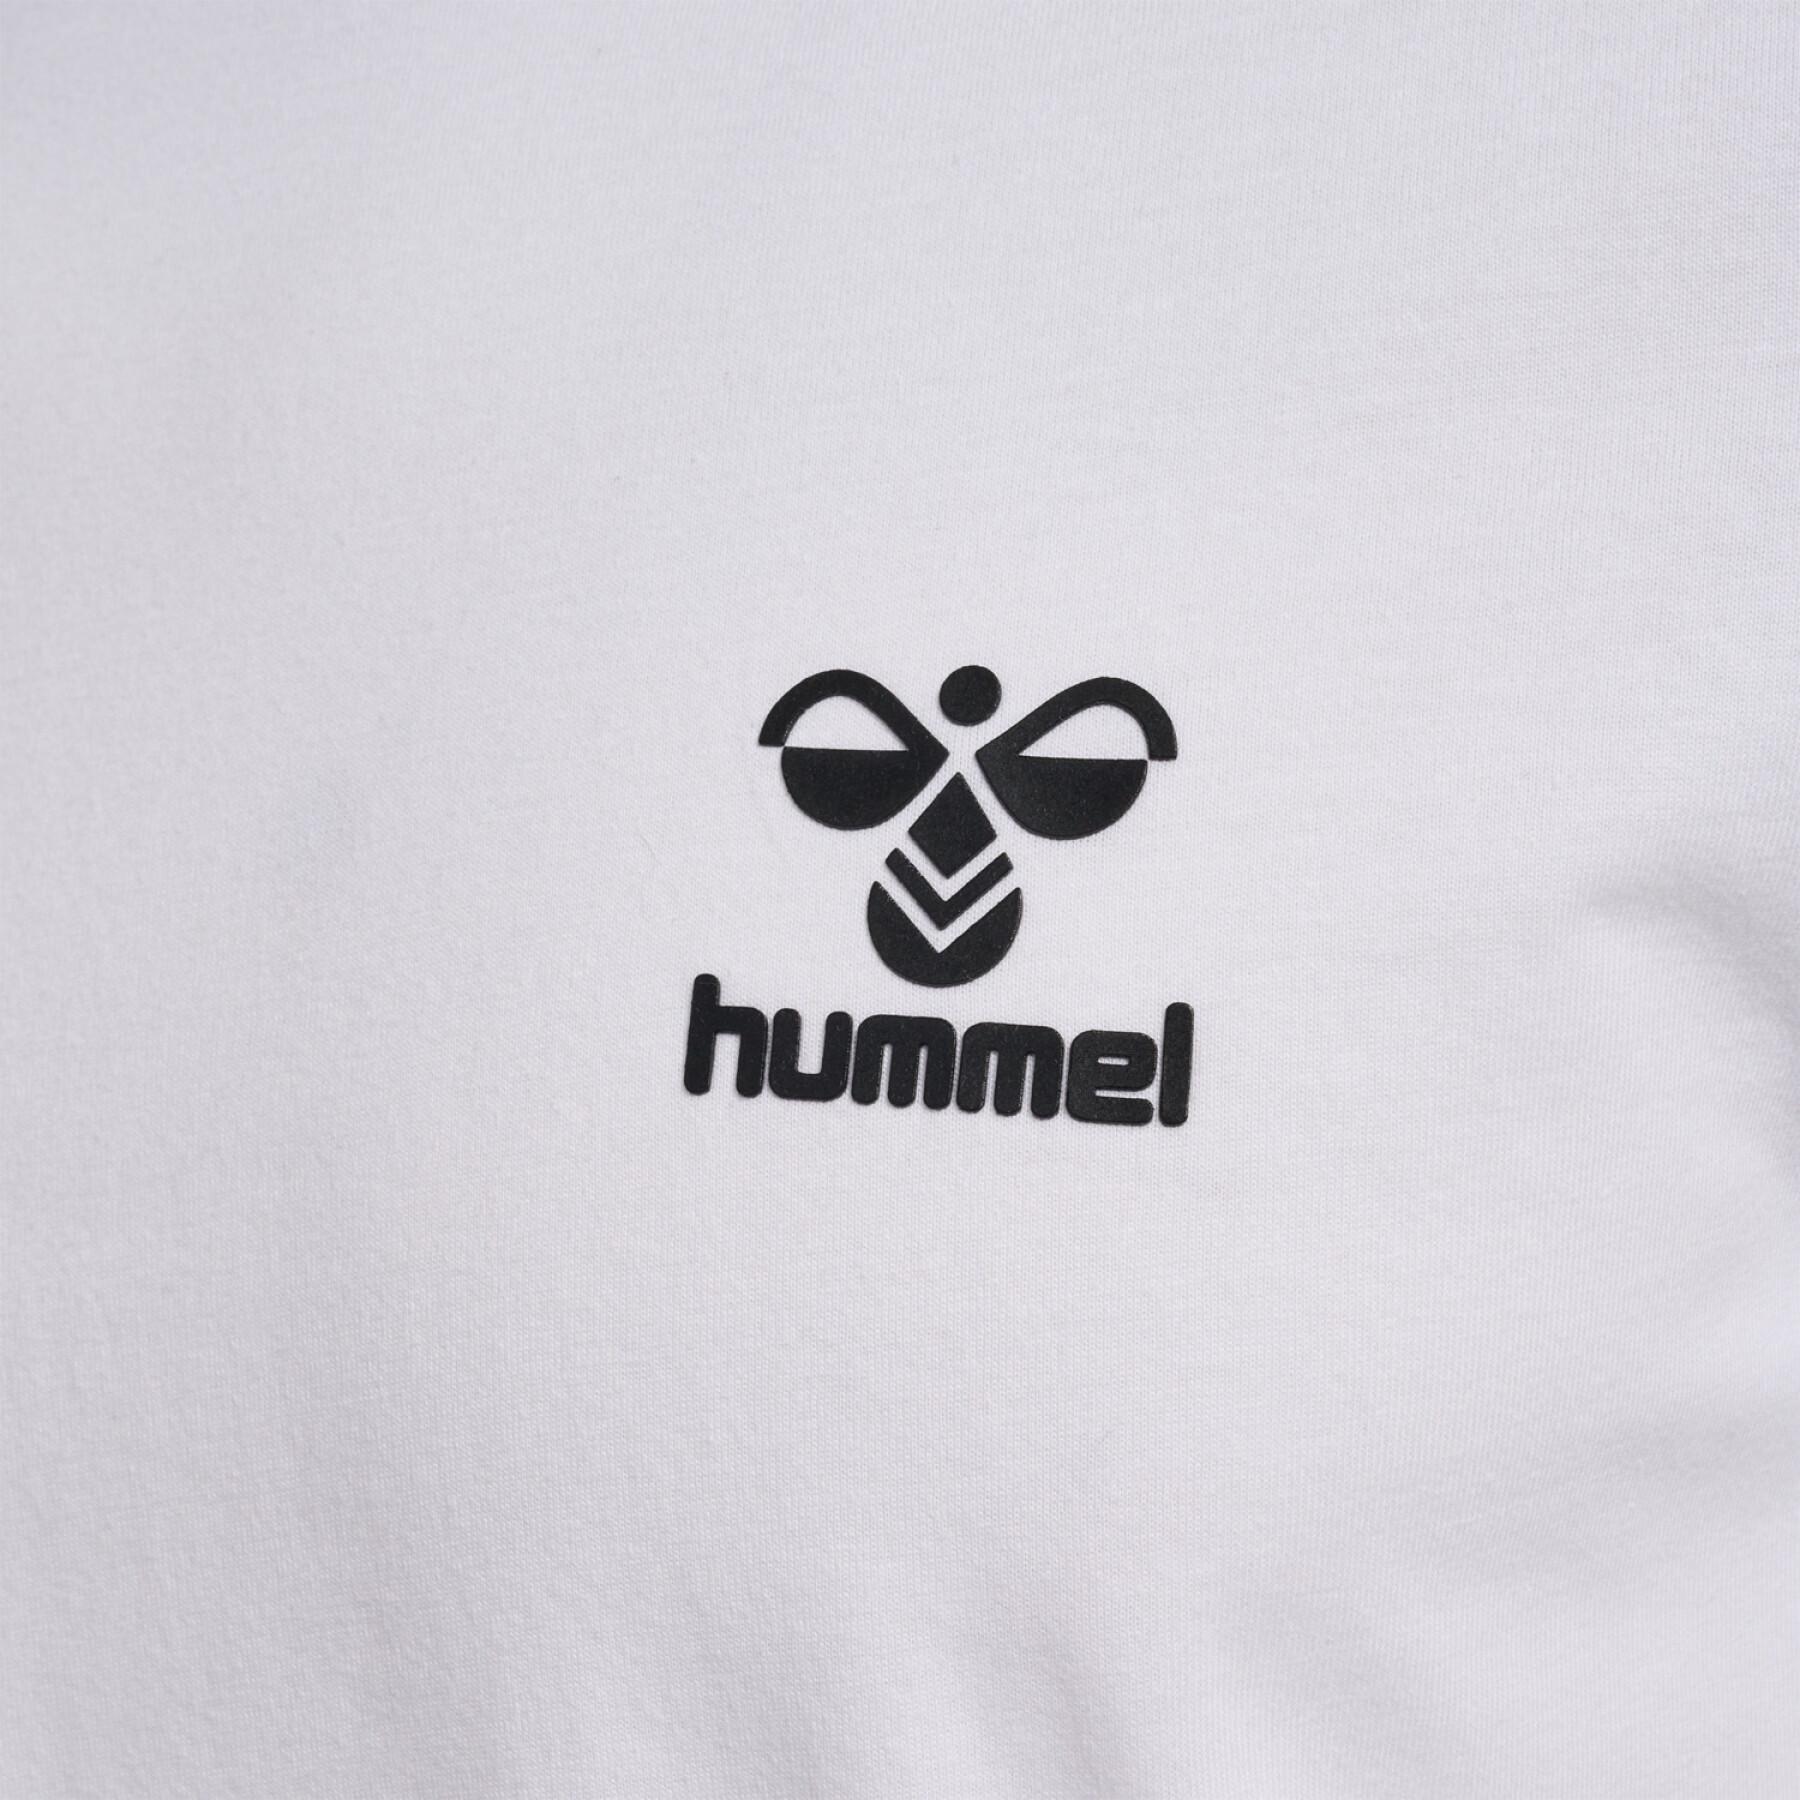 Icons Hummel T-shirt - - Lifestyle Hummel - Brands